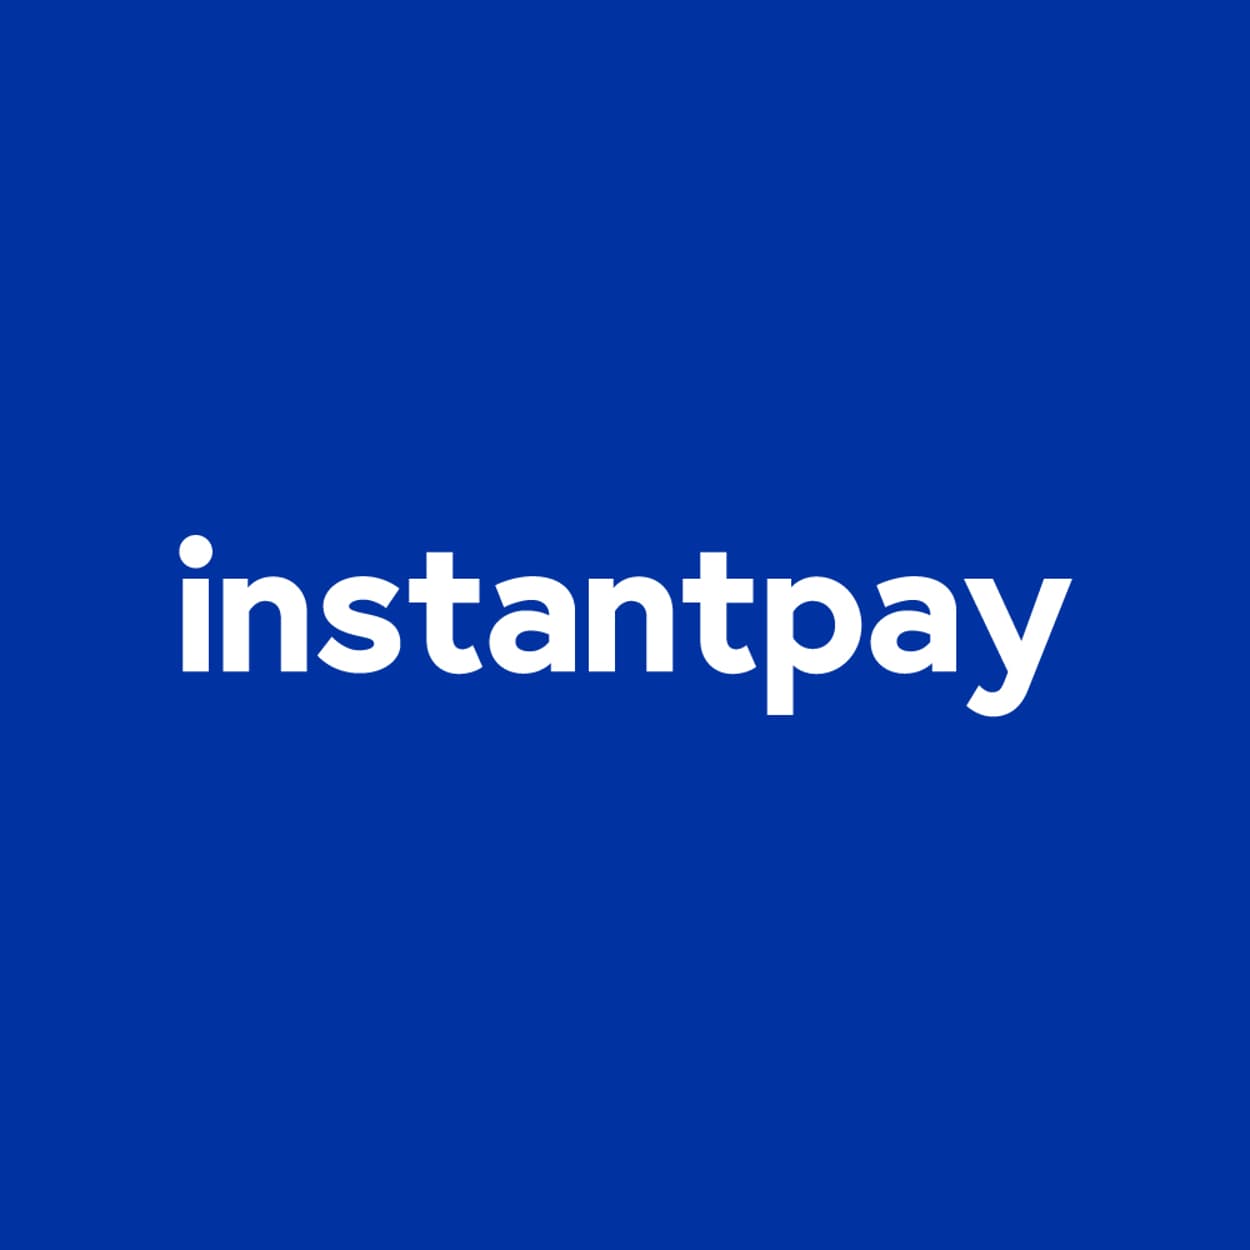 Instantpay's logo